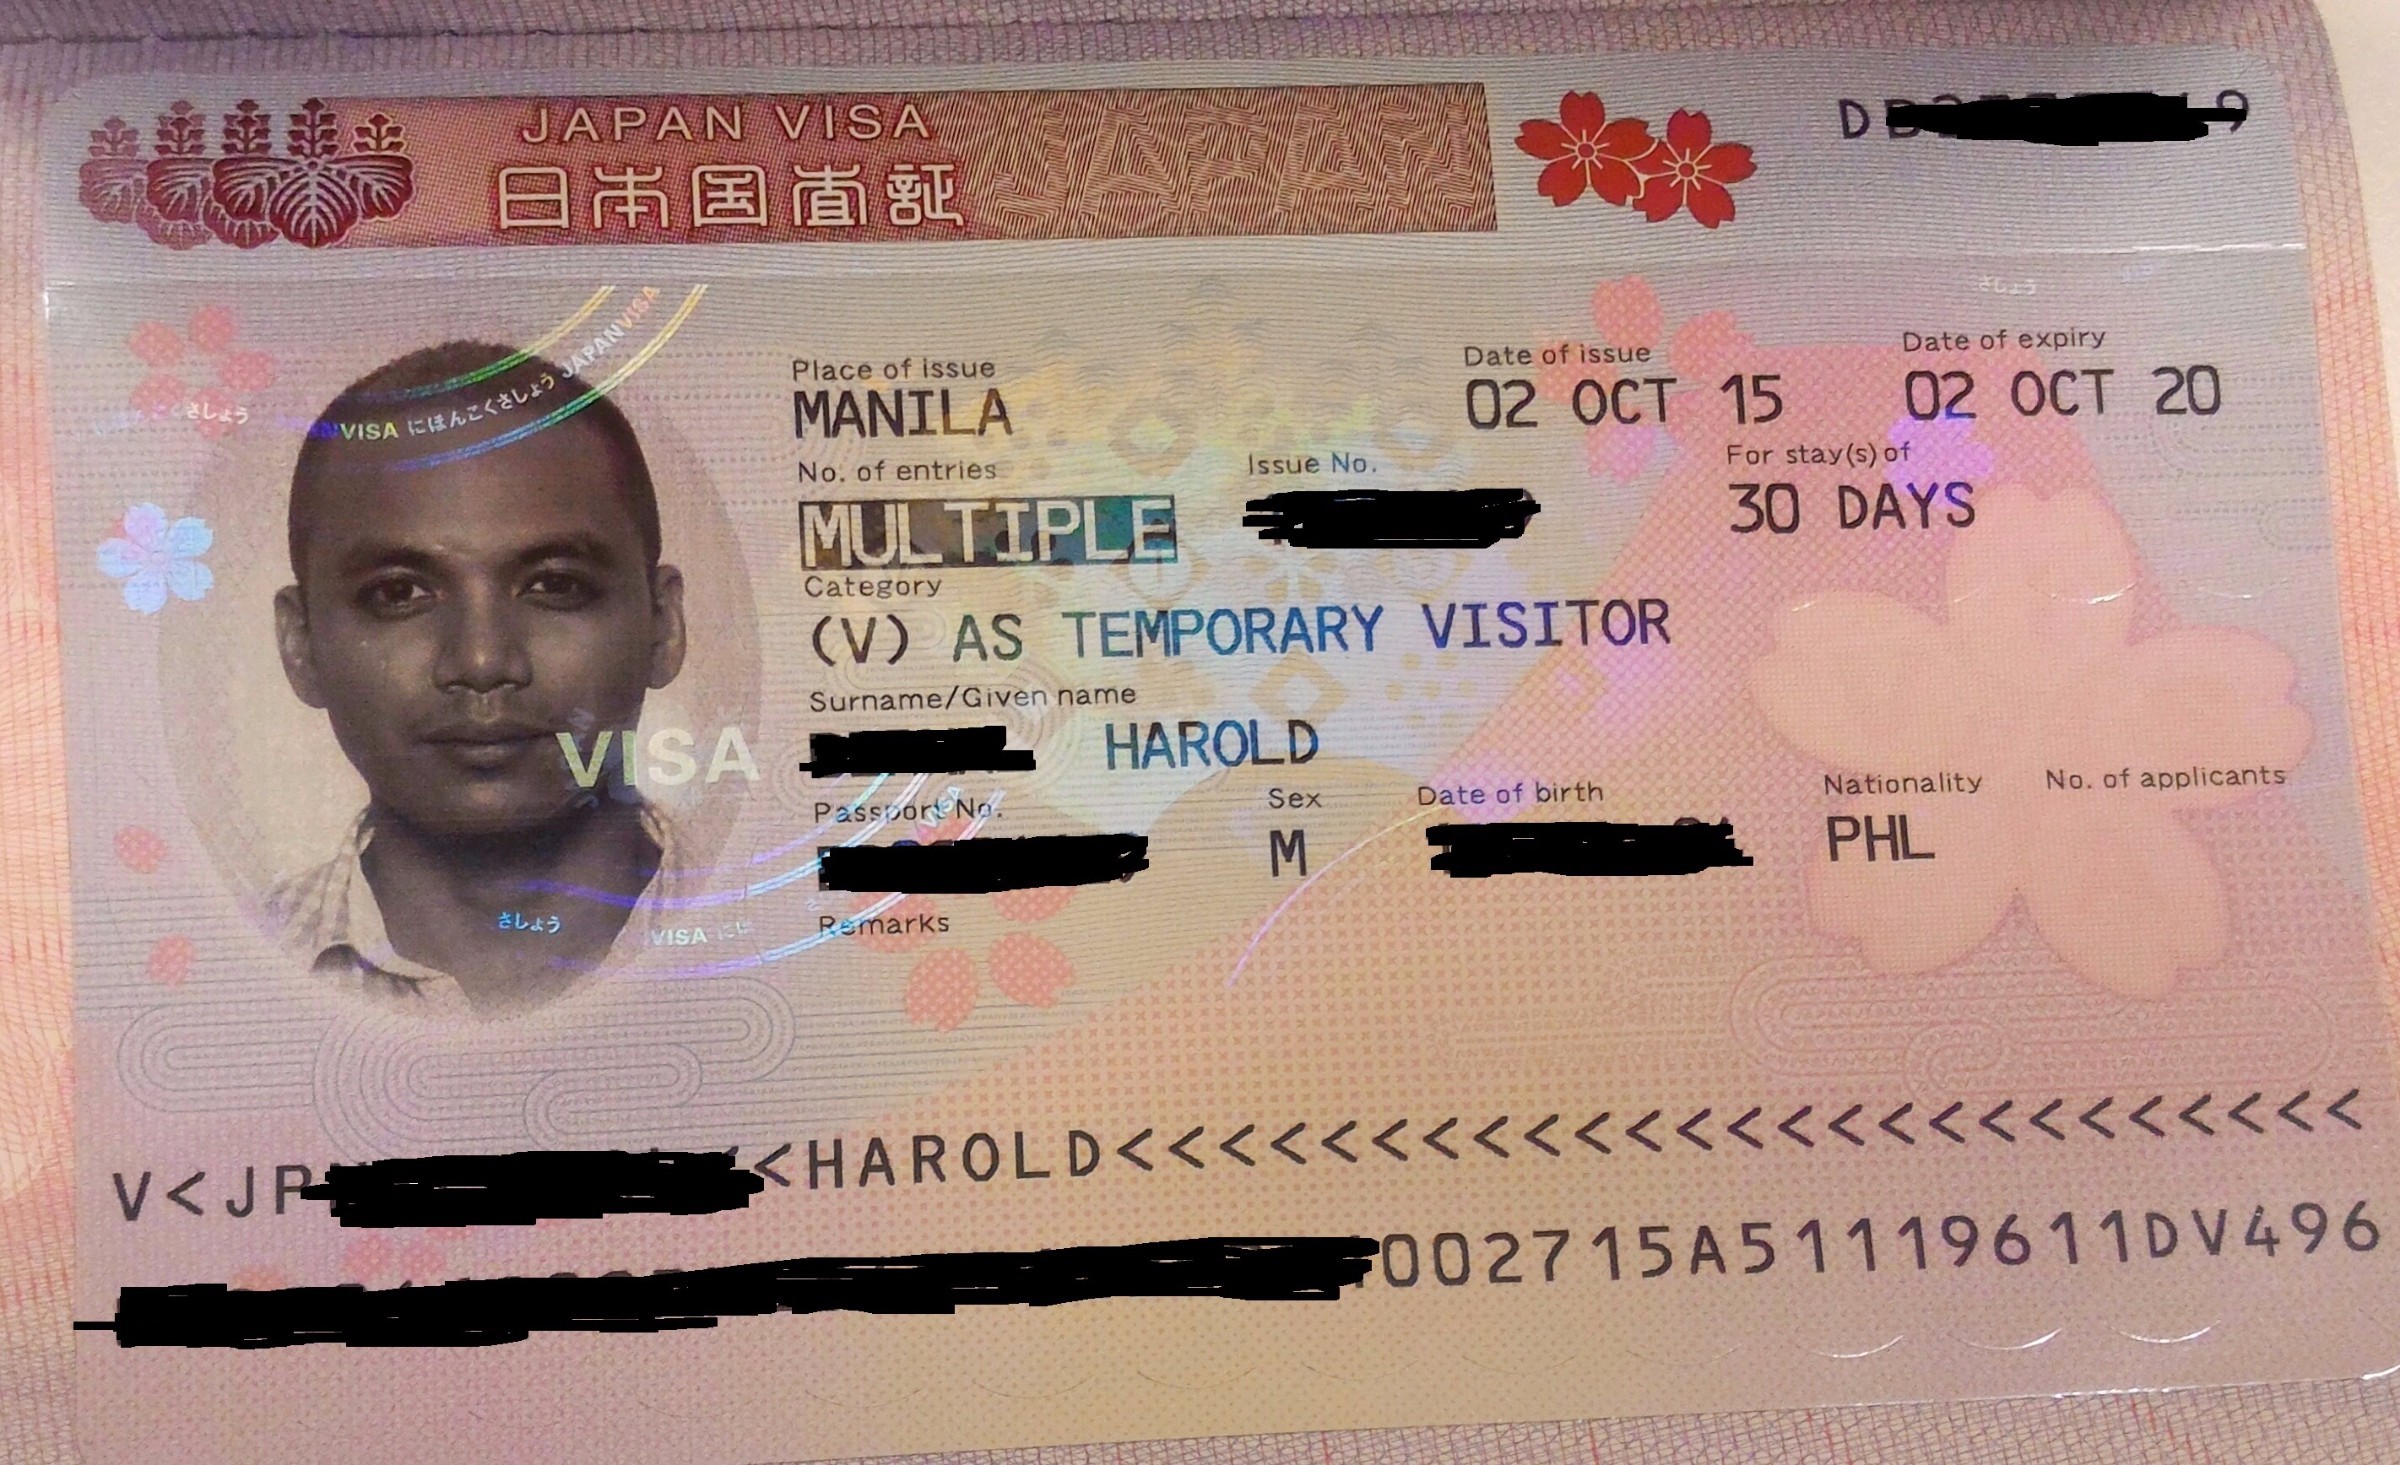 Entry visa. Japan visa. Multiple visa. Виза в Японию. Фото на визу в Японию.